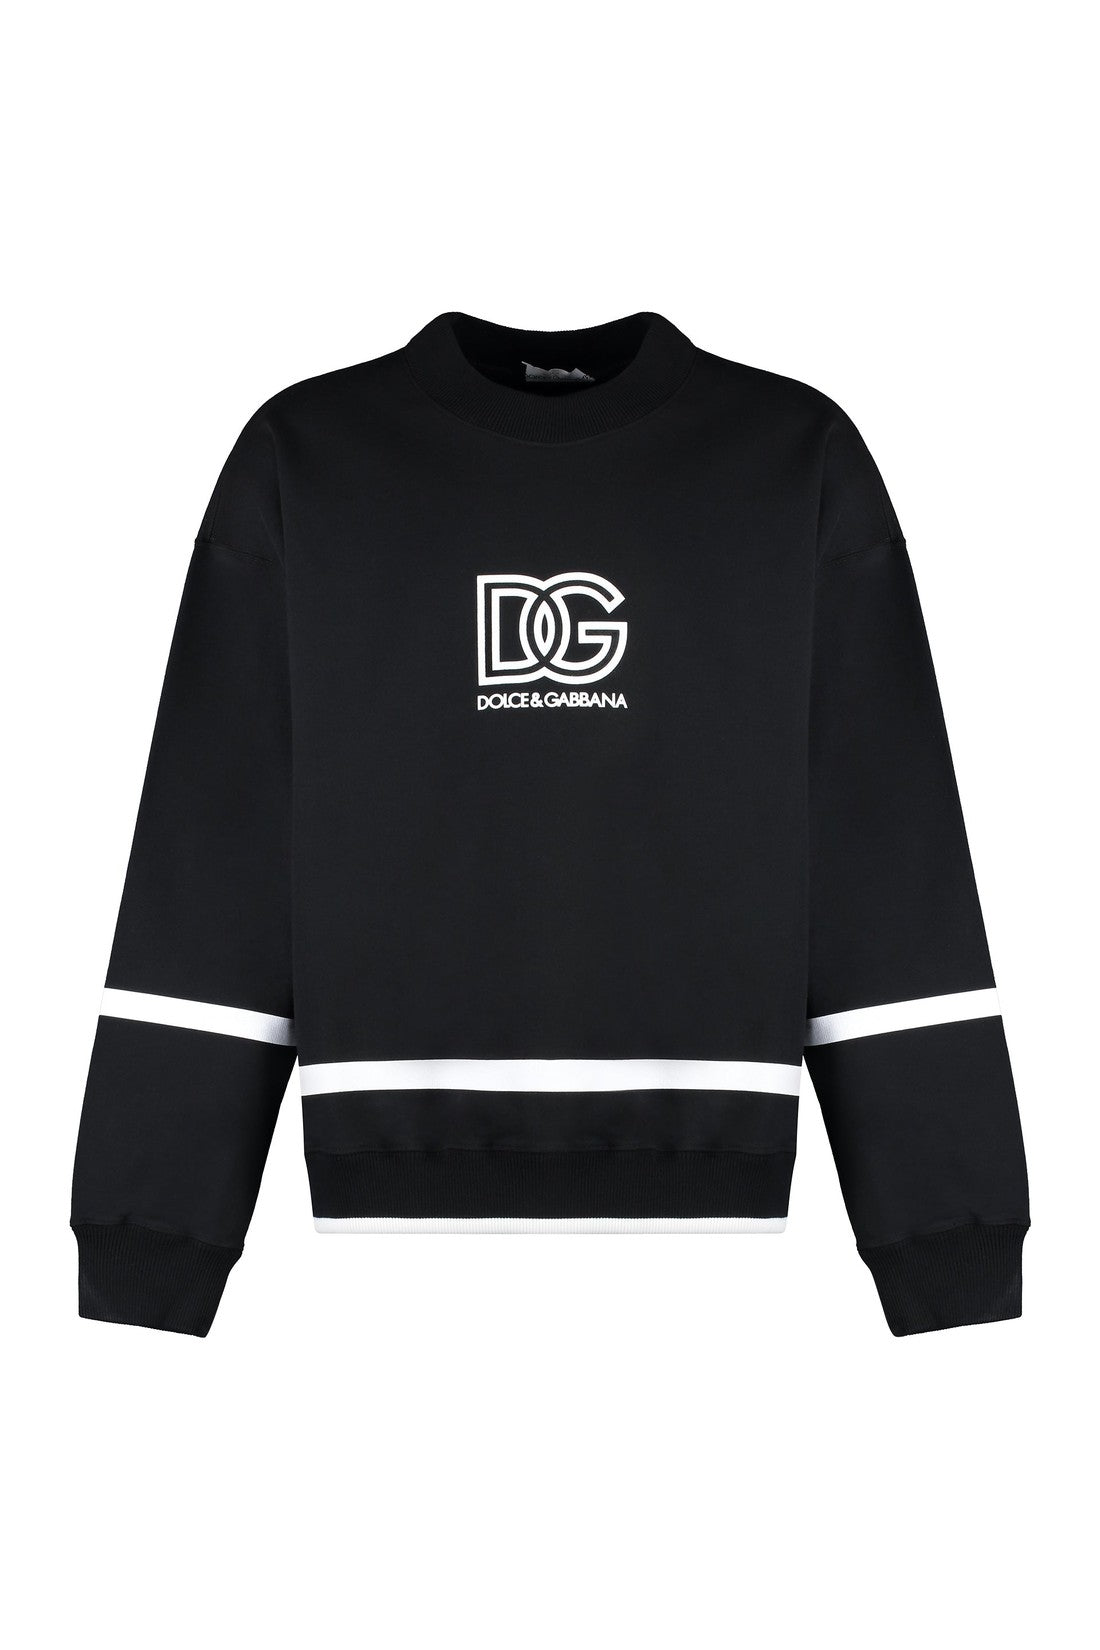 Dolce & Gabbana-OUTLET-SALE-Cotton crew-neck sweatshirt-ARCHIVIST